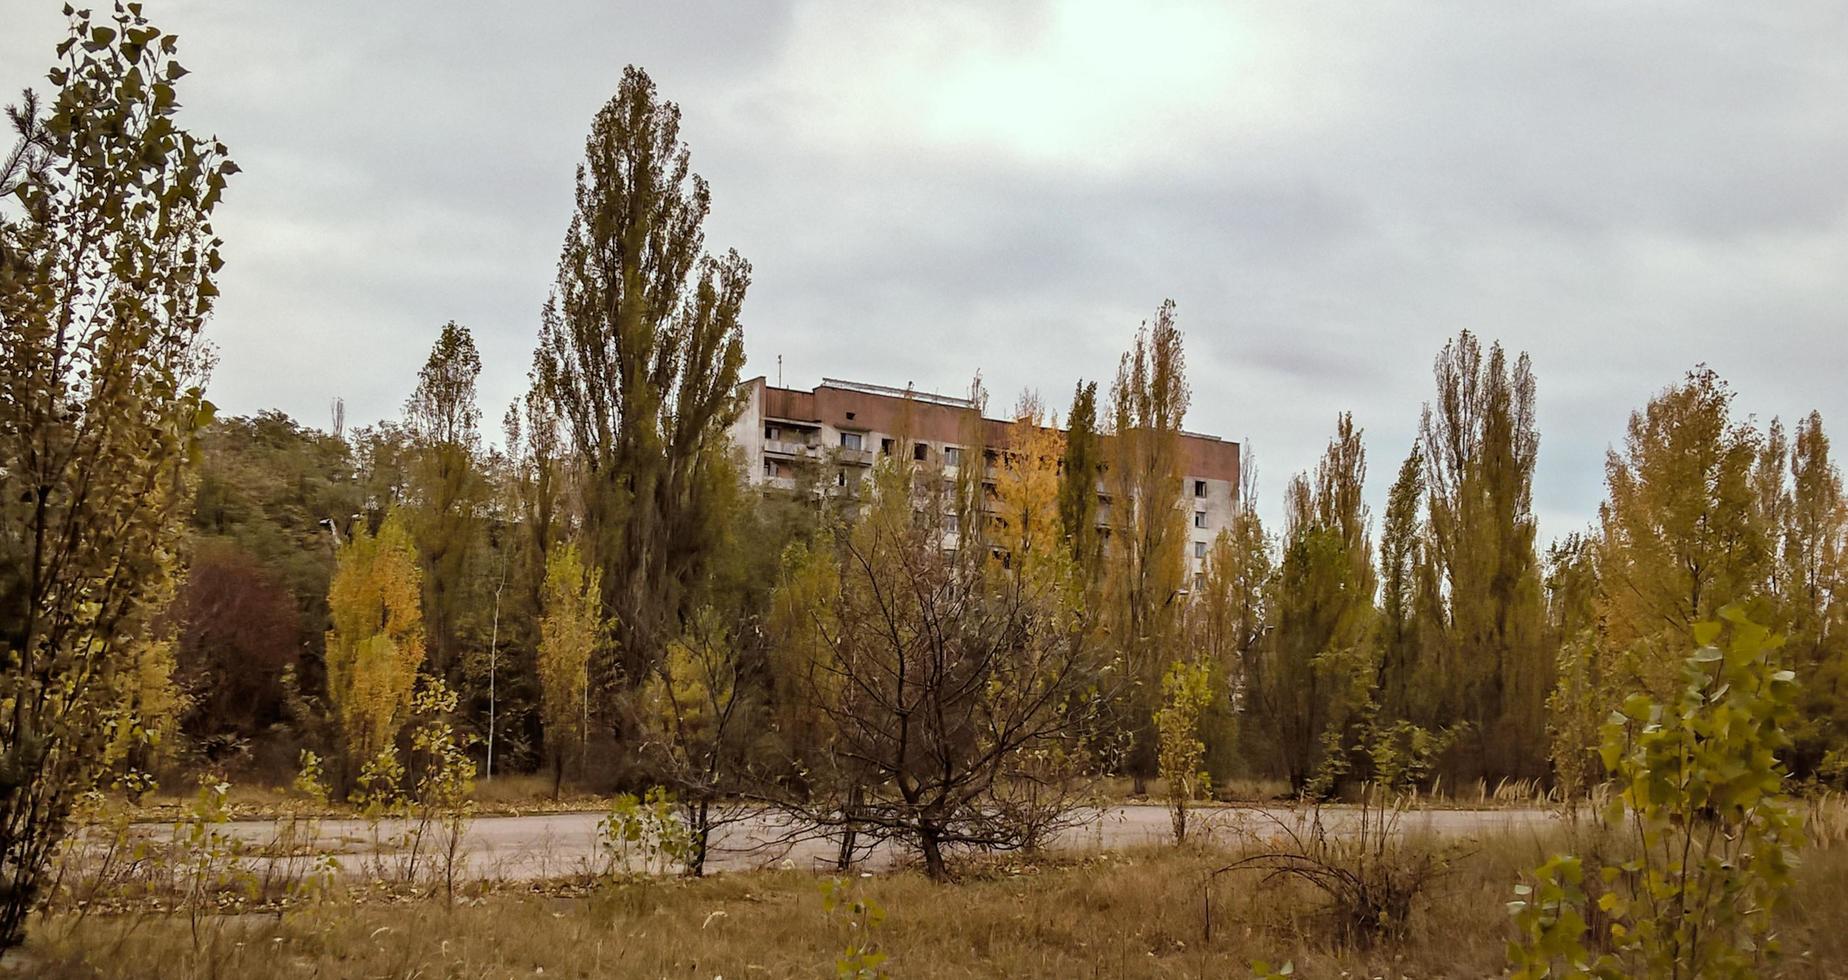 Pripyat, Ukraine, 2021 - Empty deserted houses among the trees in Chernobyl photo